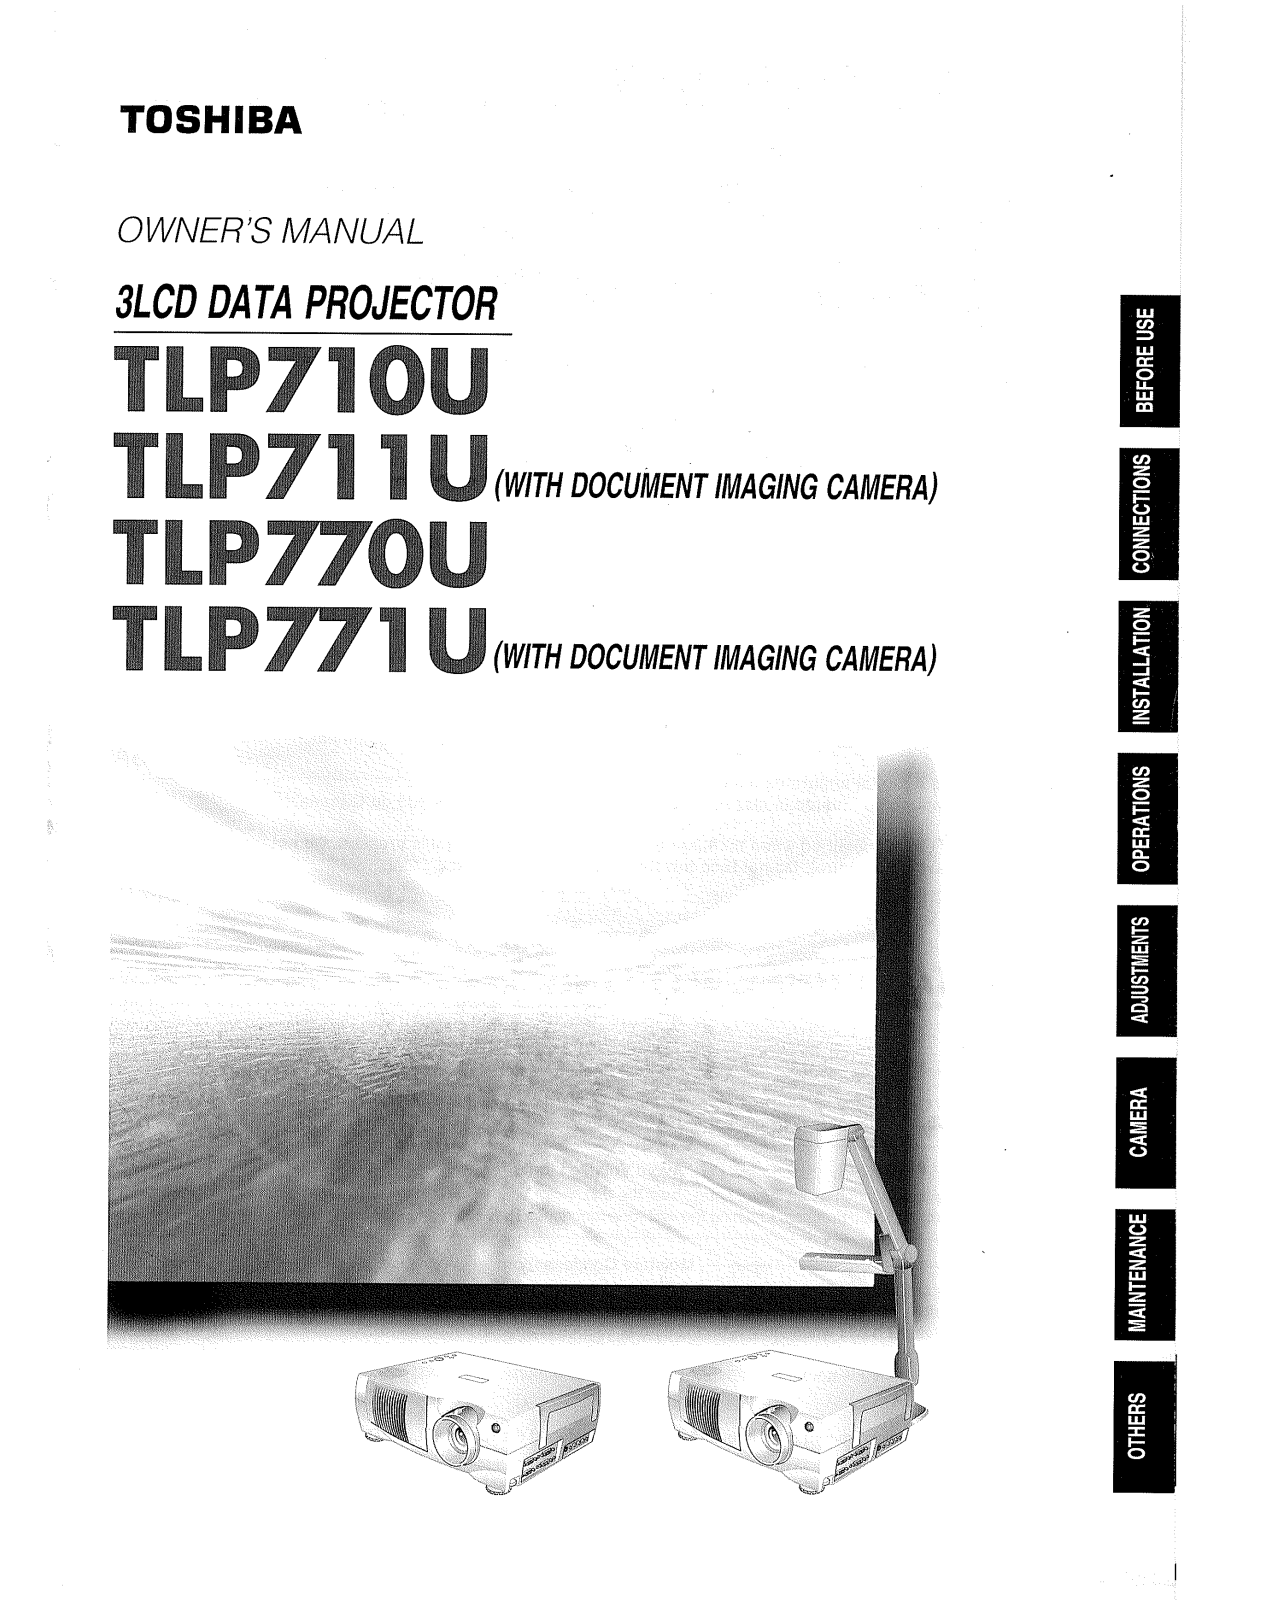 Toshiba TLP711U, TLP771U, TLP770U, TLP710U User Manual